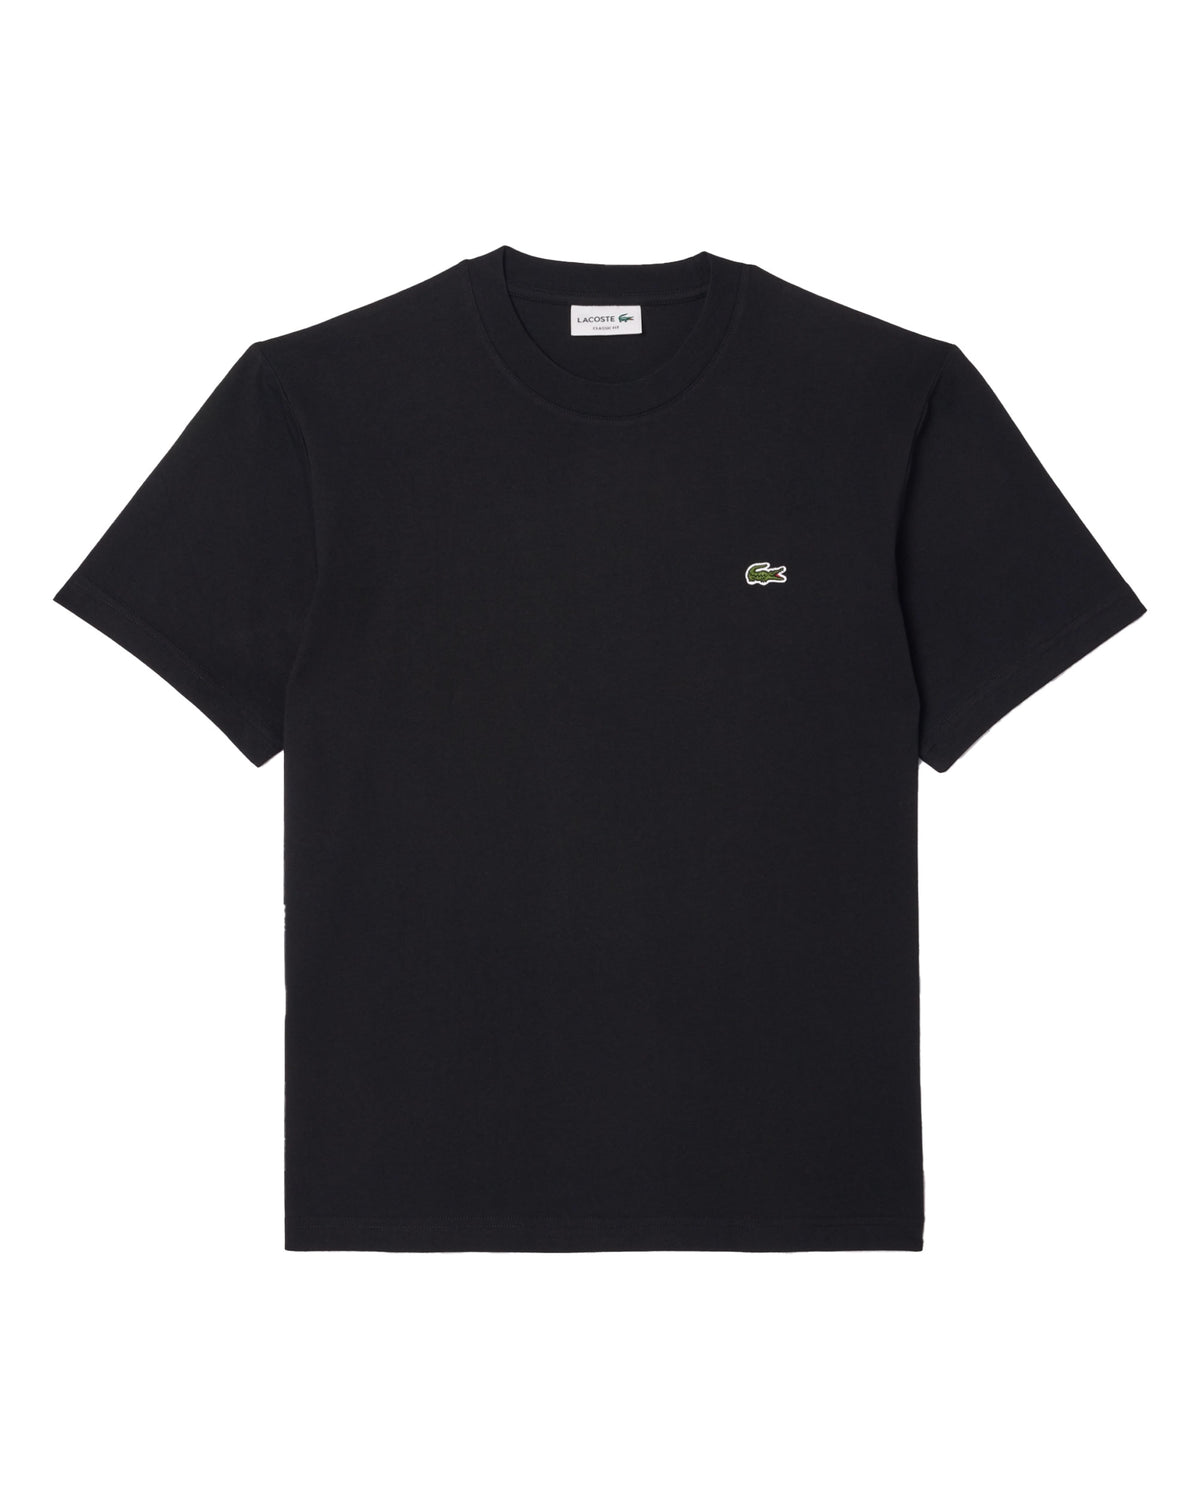 T-Shirt Uomo Lacoste Classic Logo Nero